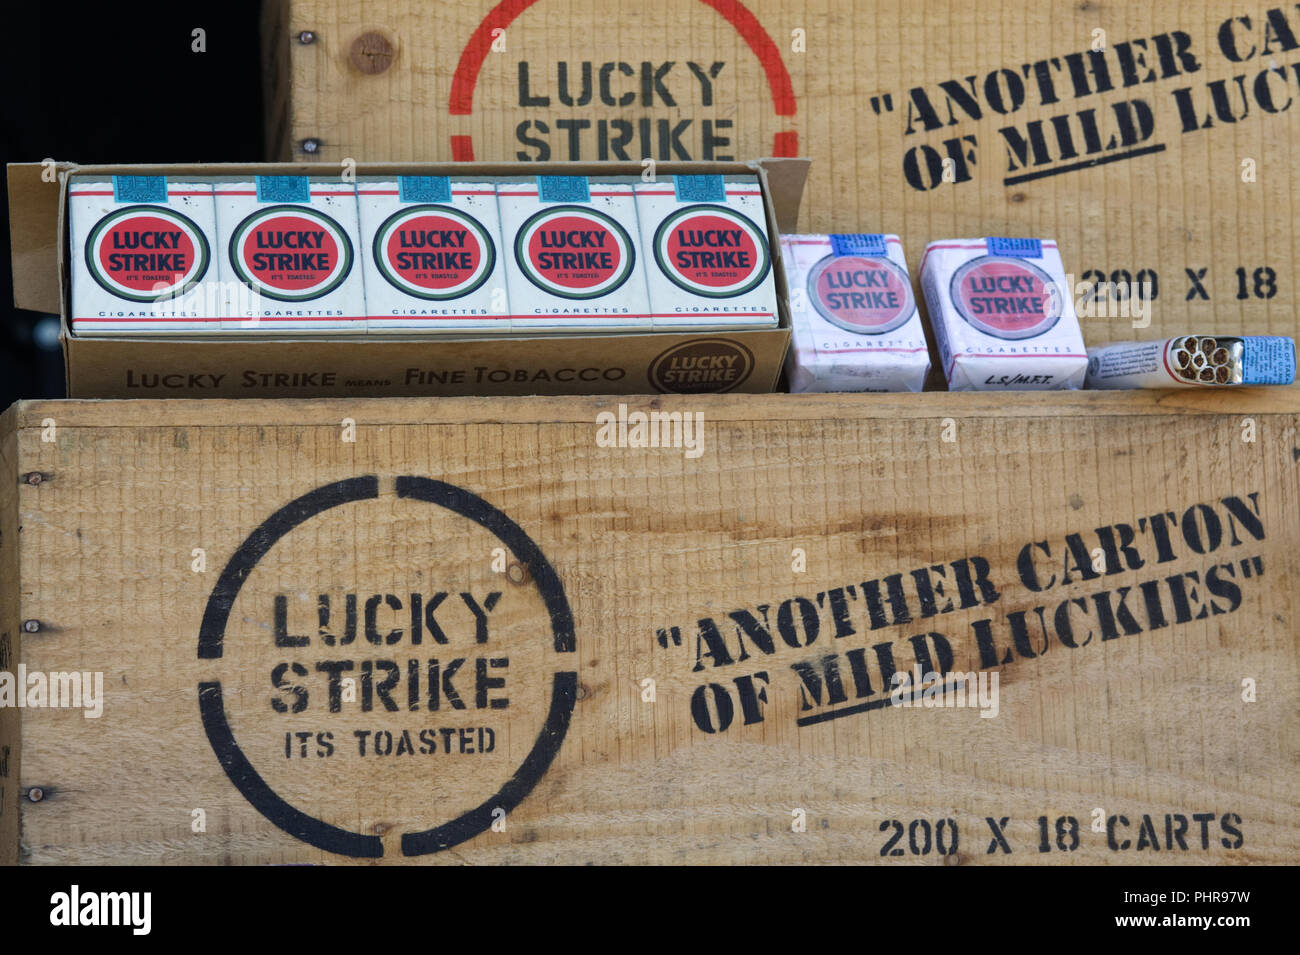 Lucky strike cigarettes Stock Photo